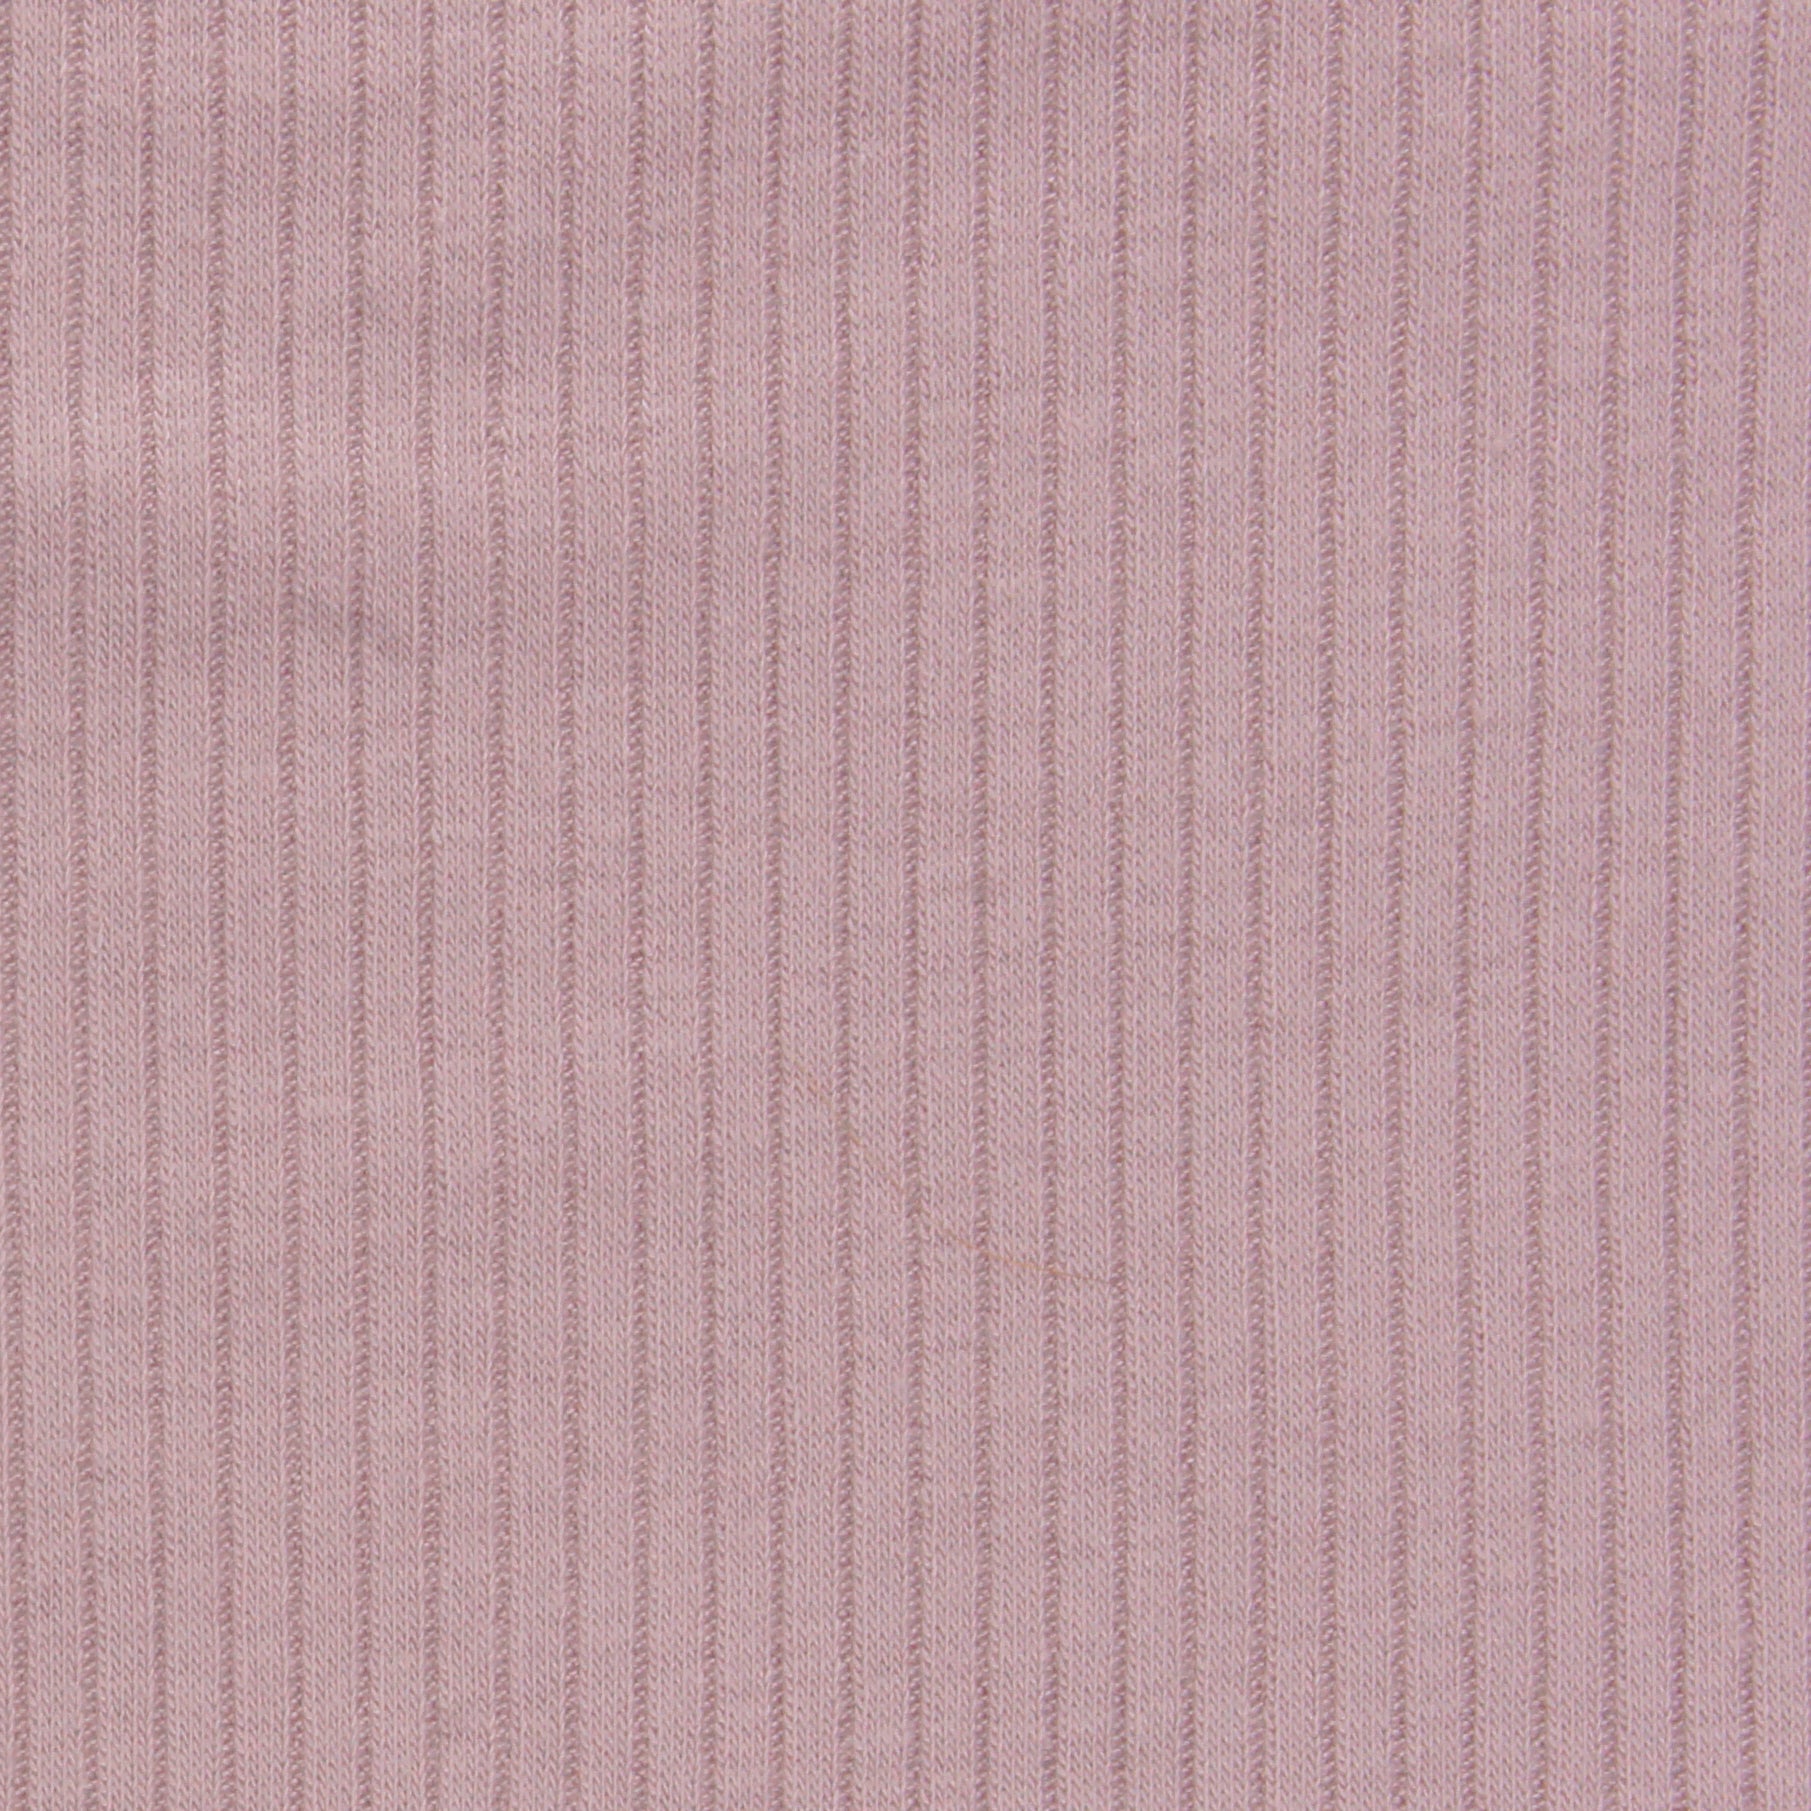 Tencel Modal Spandex Ribbed Knit - Light Lilac